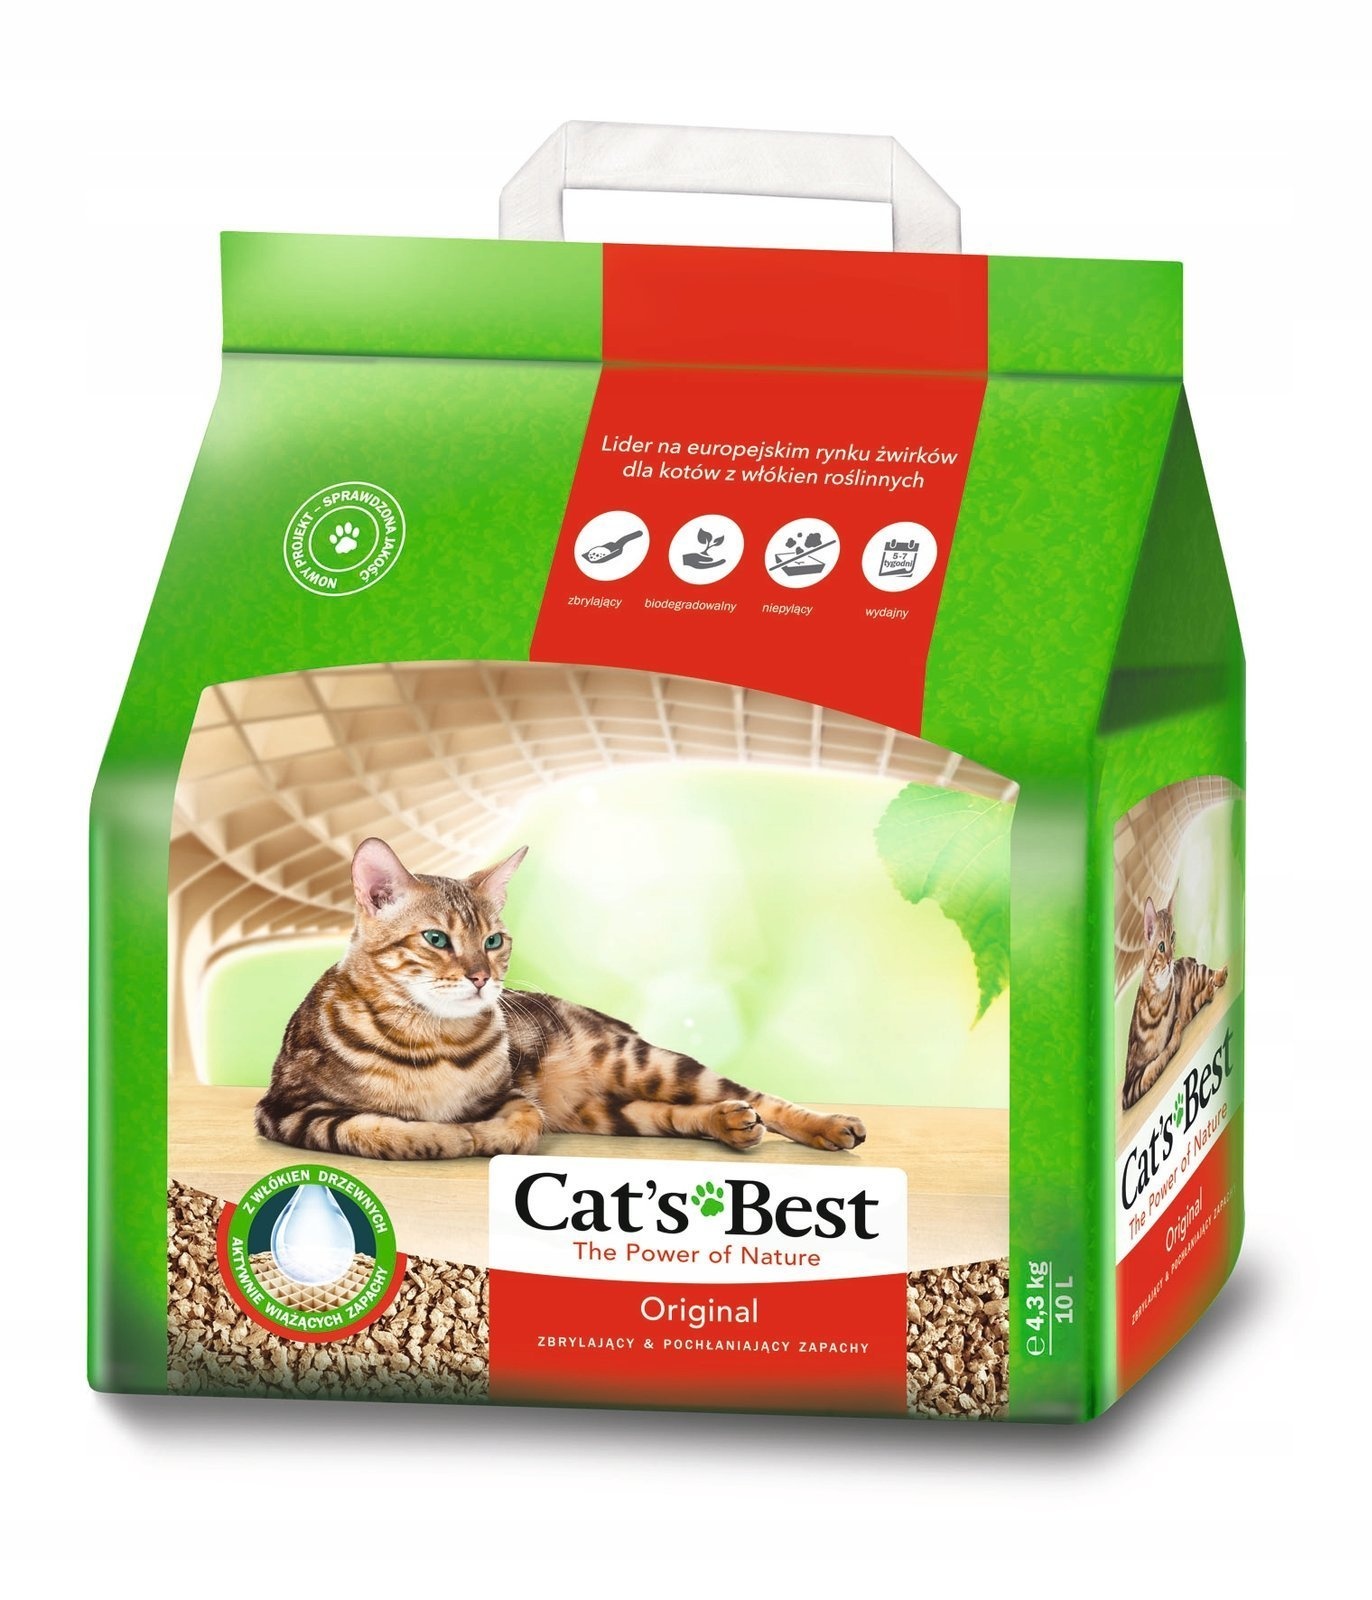 JRS Cat's Best Eco Plus / Original Katzenstreu 10l / 4,3kg (Rabatt für Stammkunden 3%)